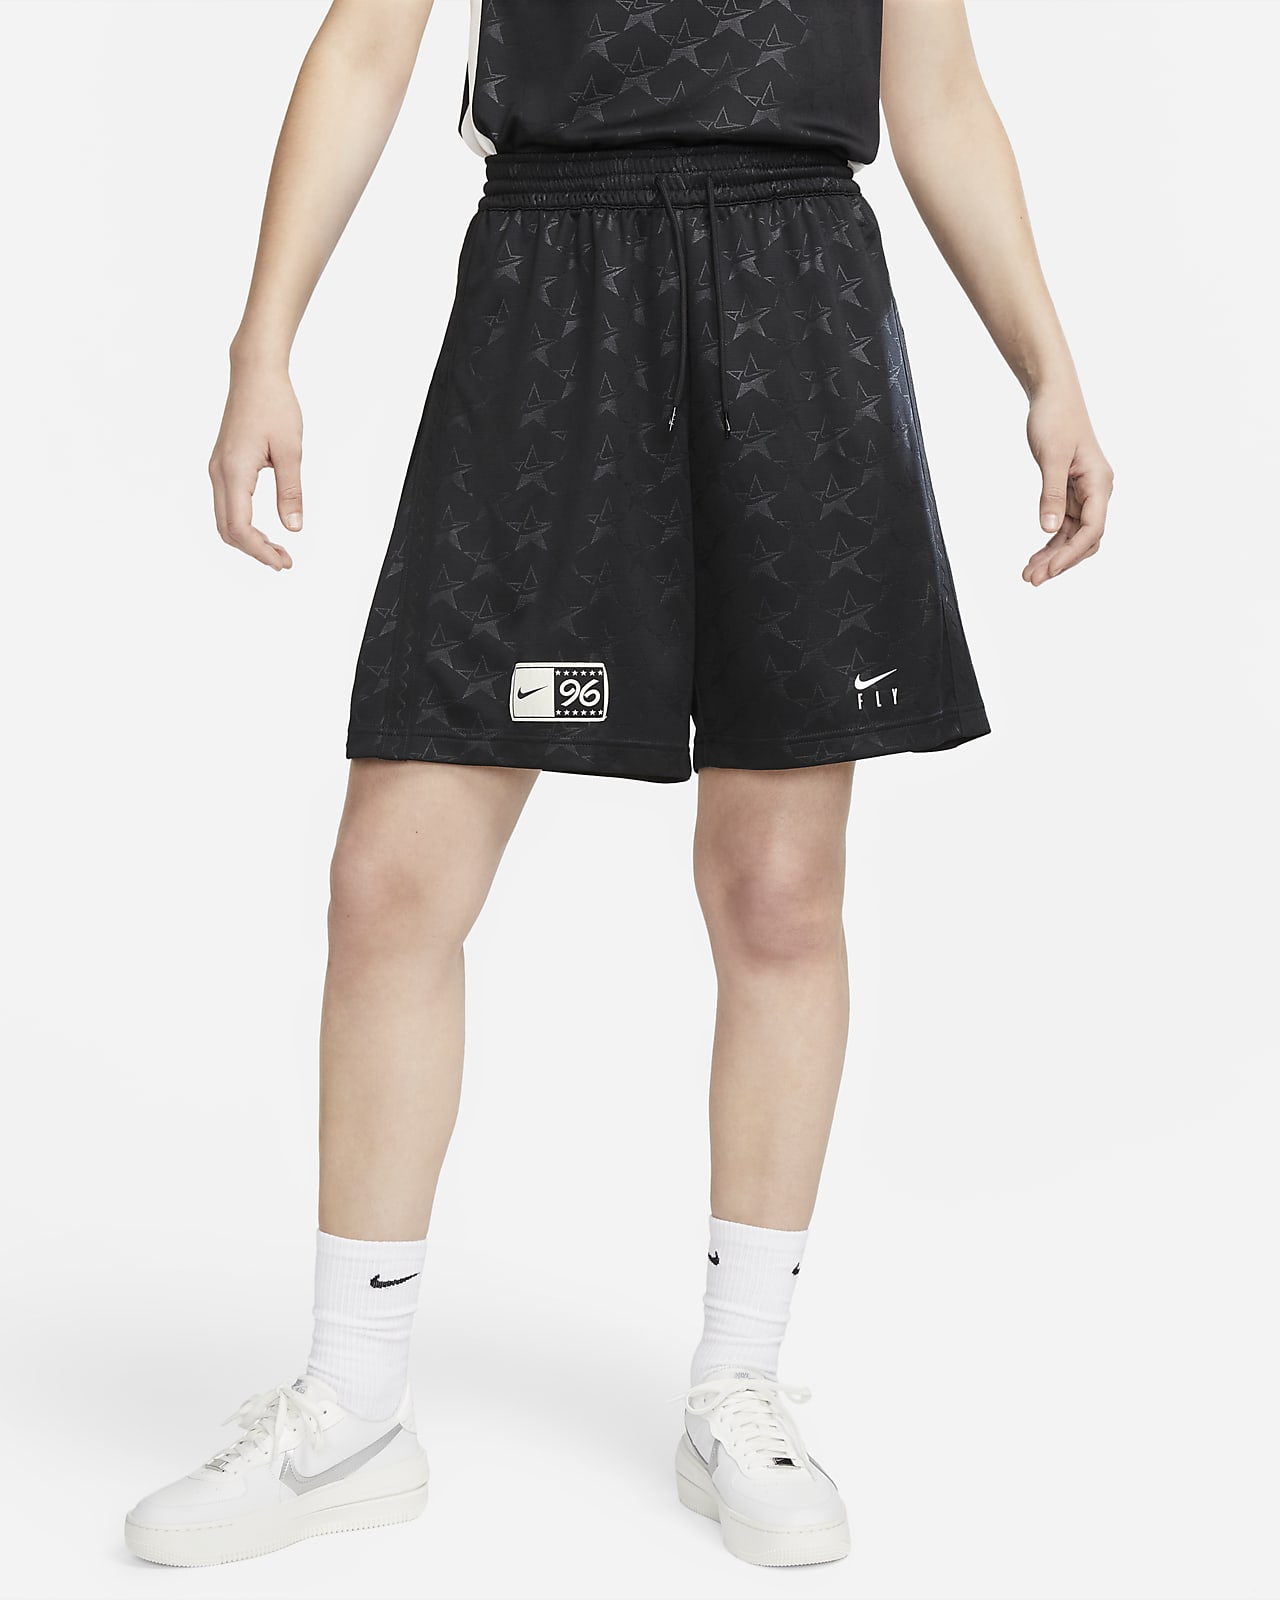 Nike Women's Basketball Shorts. Nike SA